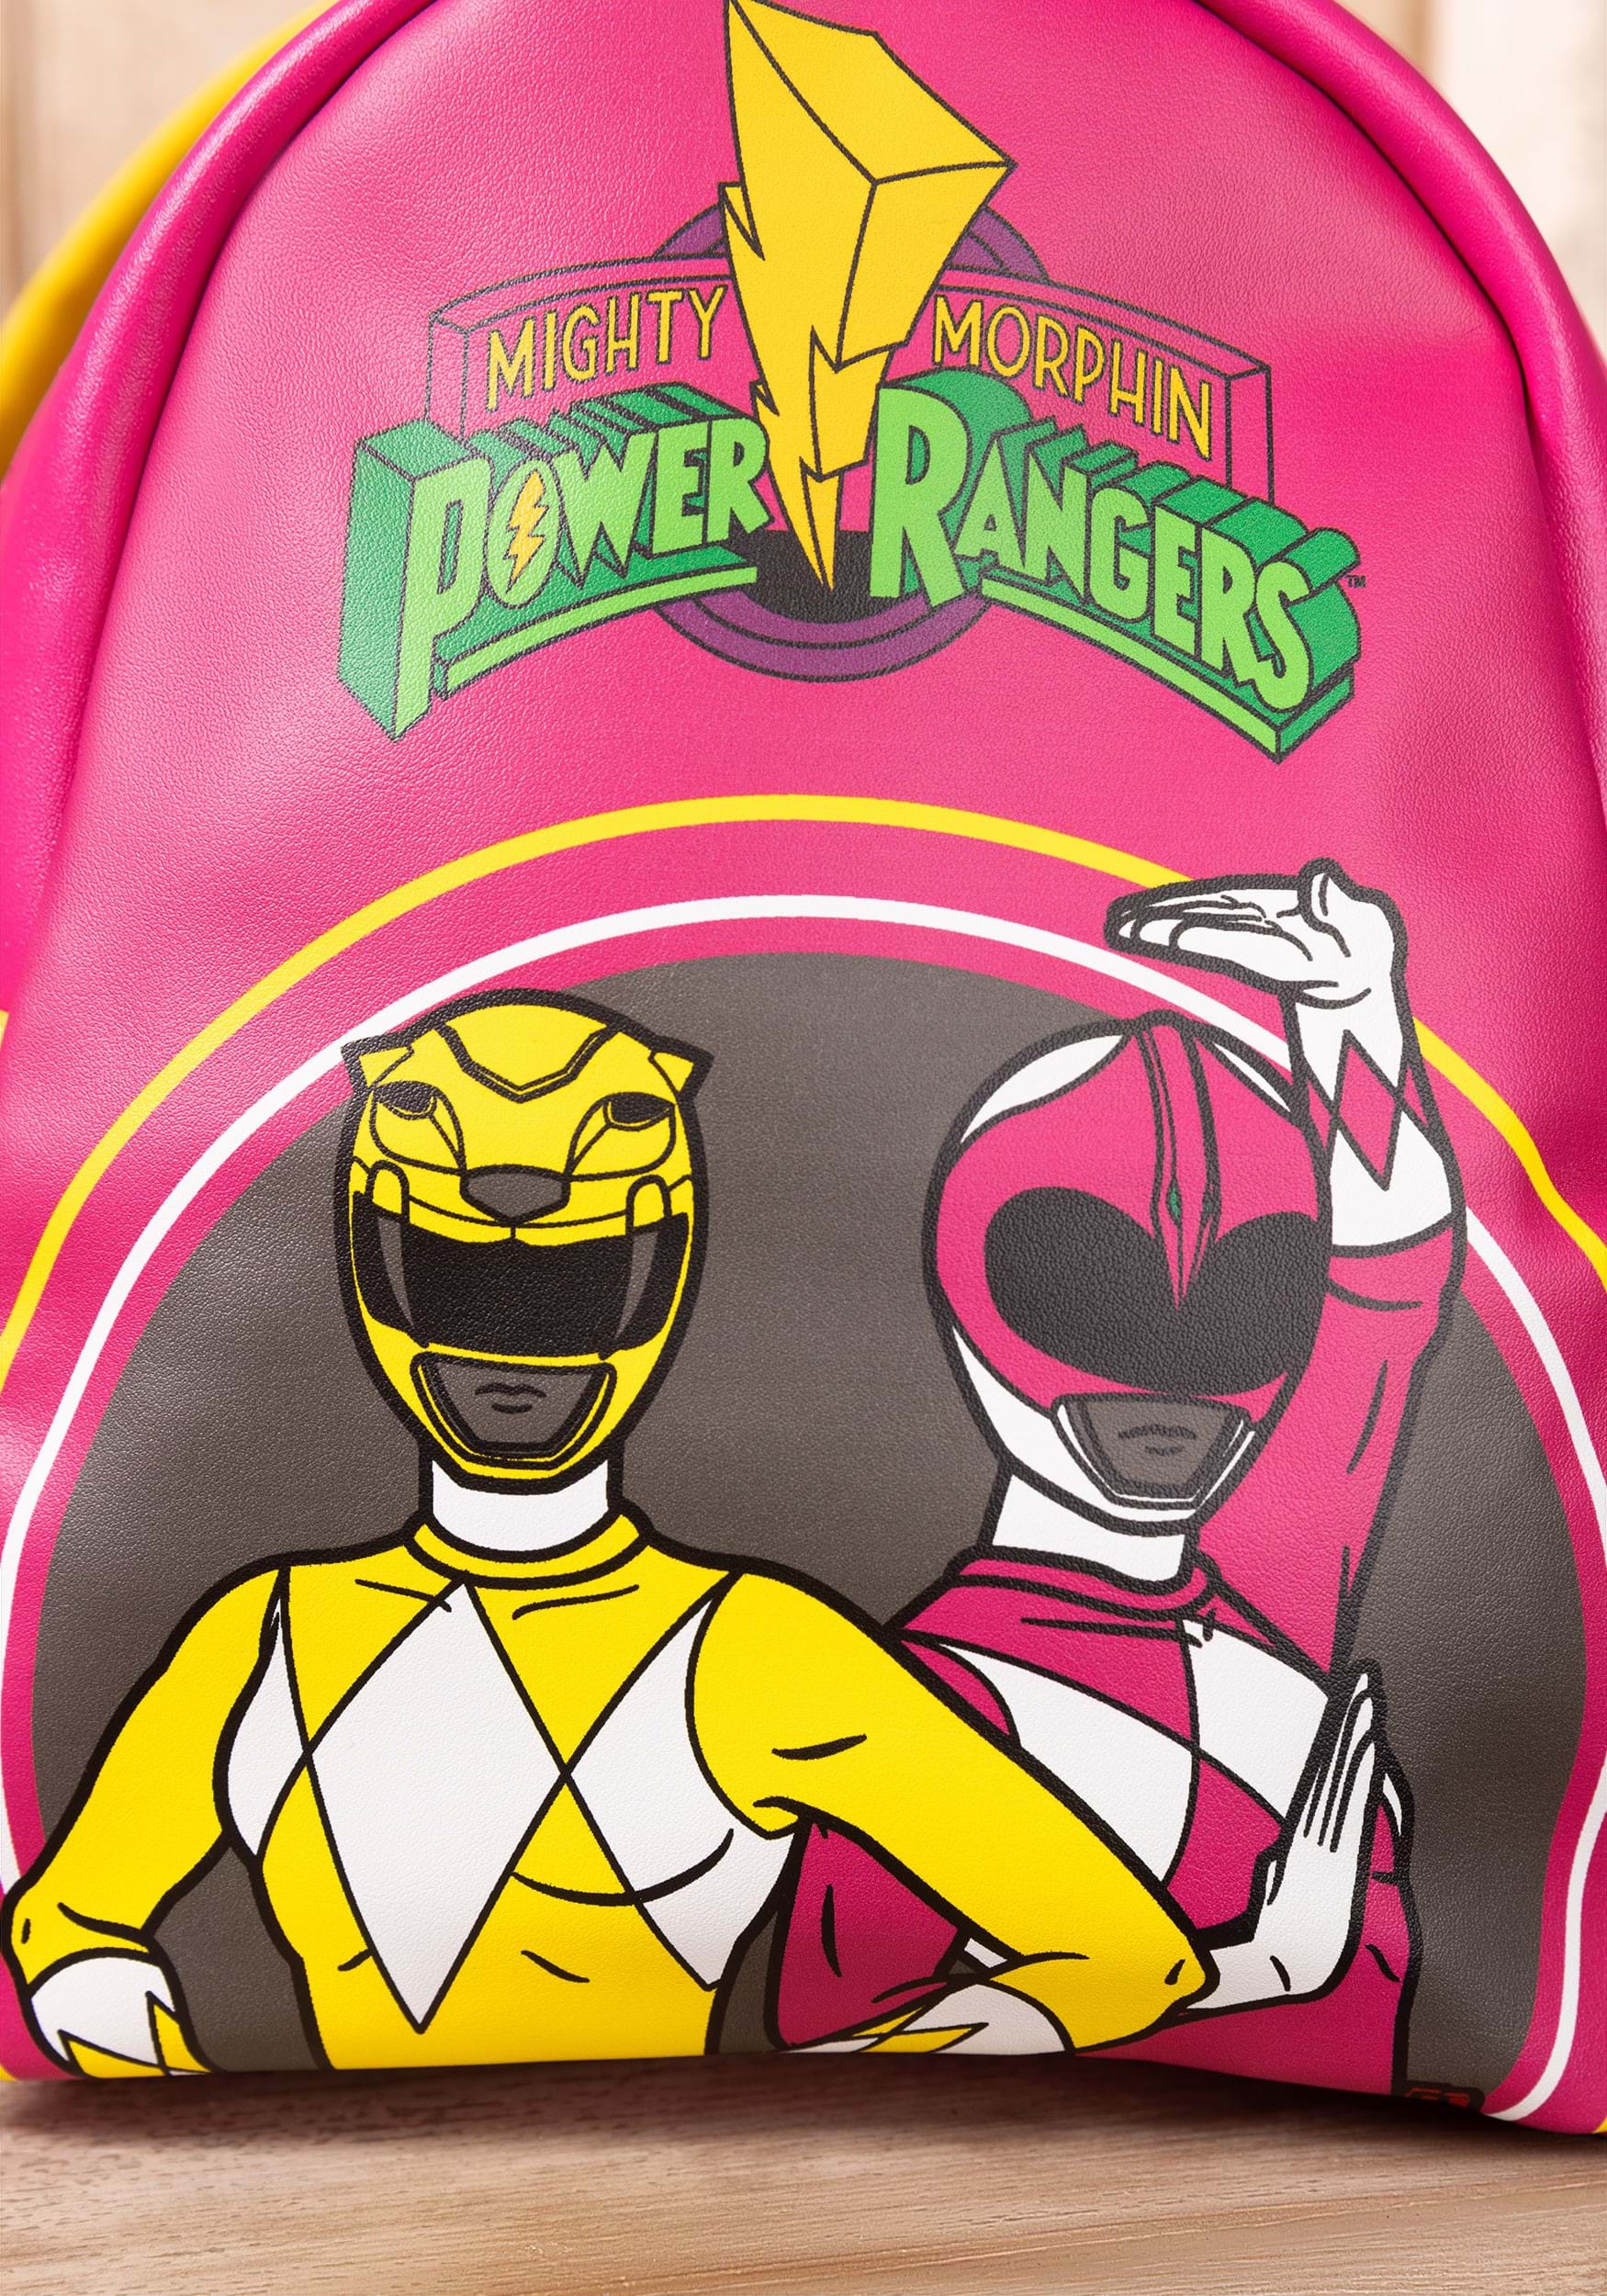 Pink & Yellow Power Rangers Mini Backpack